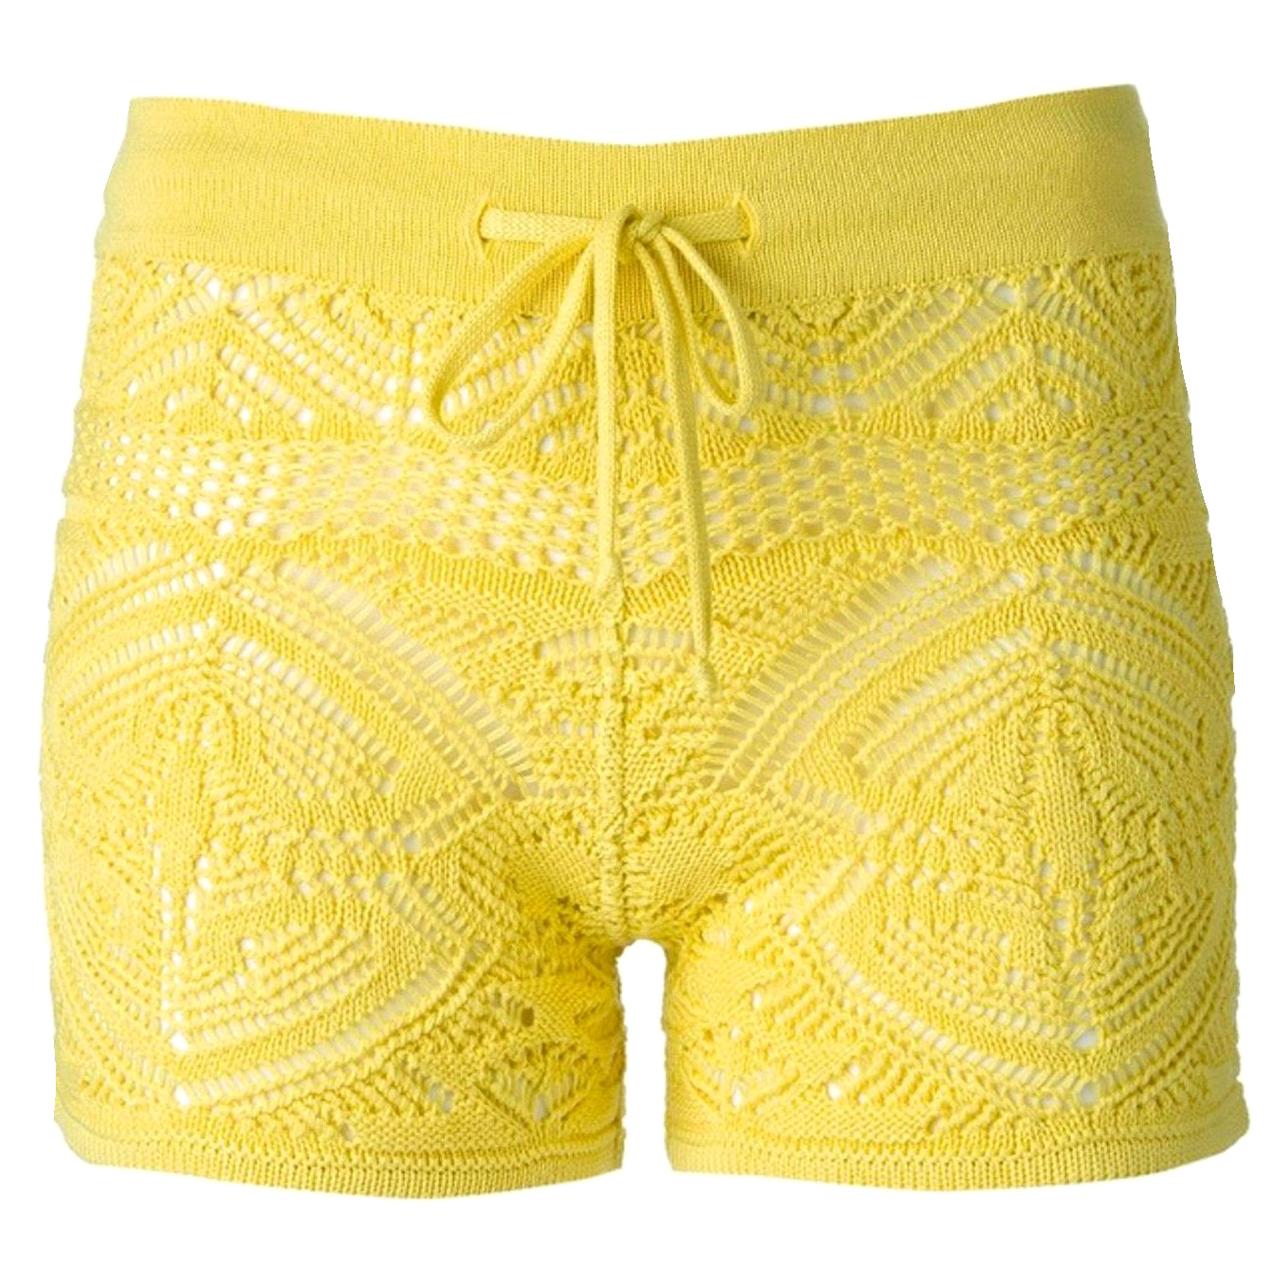 NEW Emilio Pucci Yellow  Crochet Knit Shorts Hot Pants S